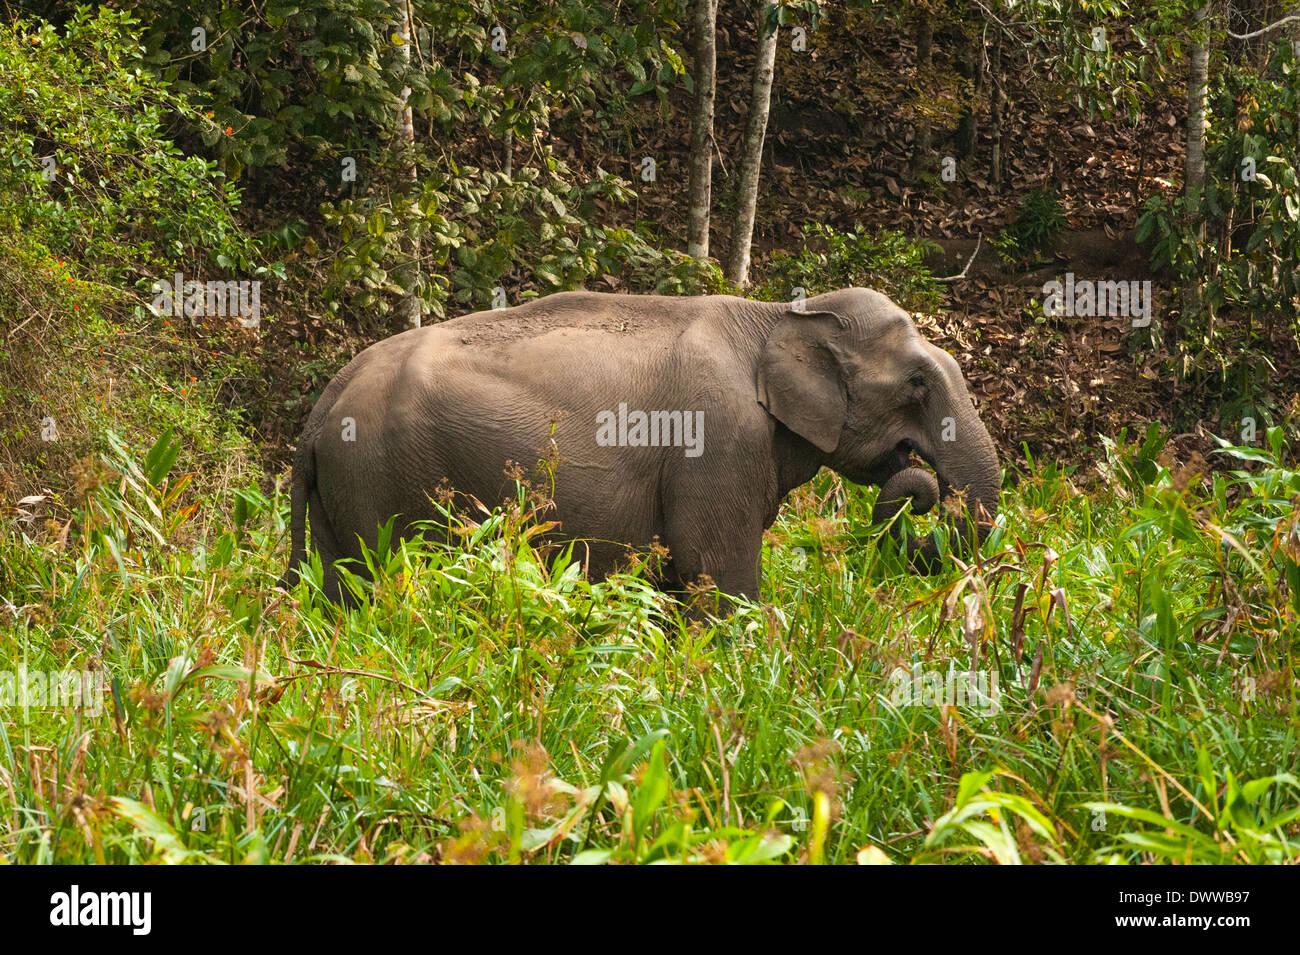 South Southern India Kerala Thekkady Periyar National Park scenery jungle wild Indian elephant grazing Elephas maximus indicus Stock Photo